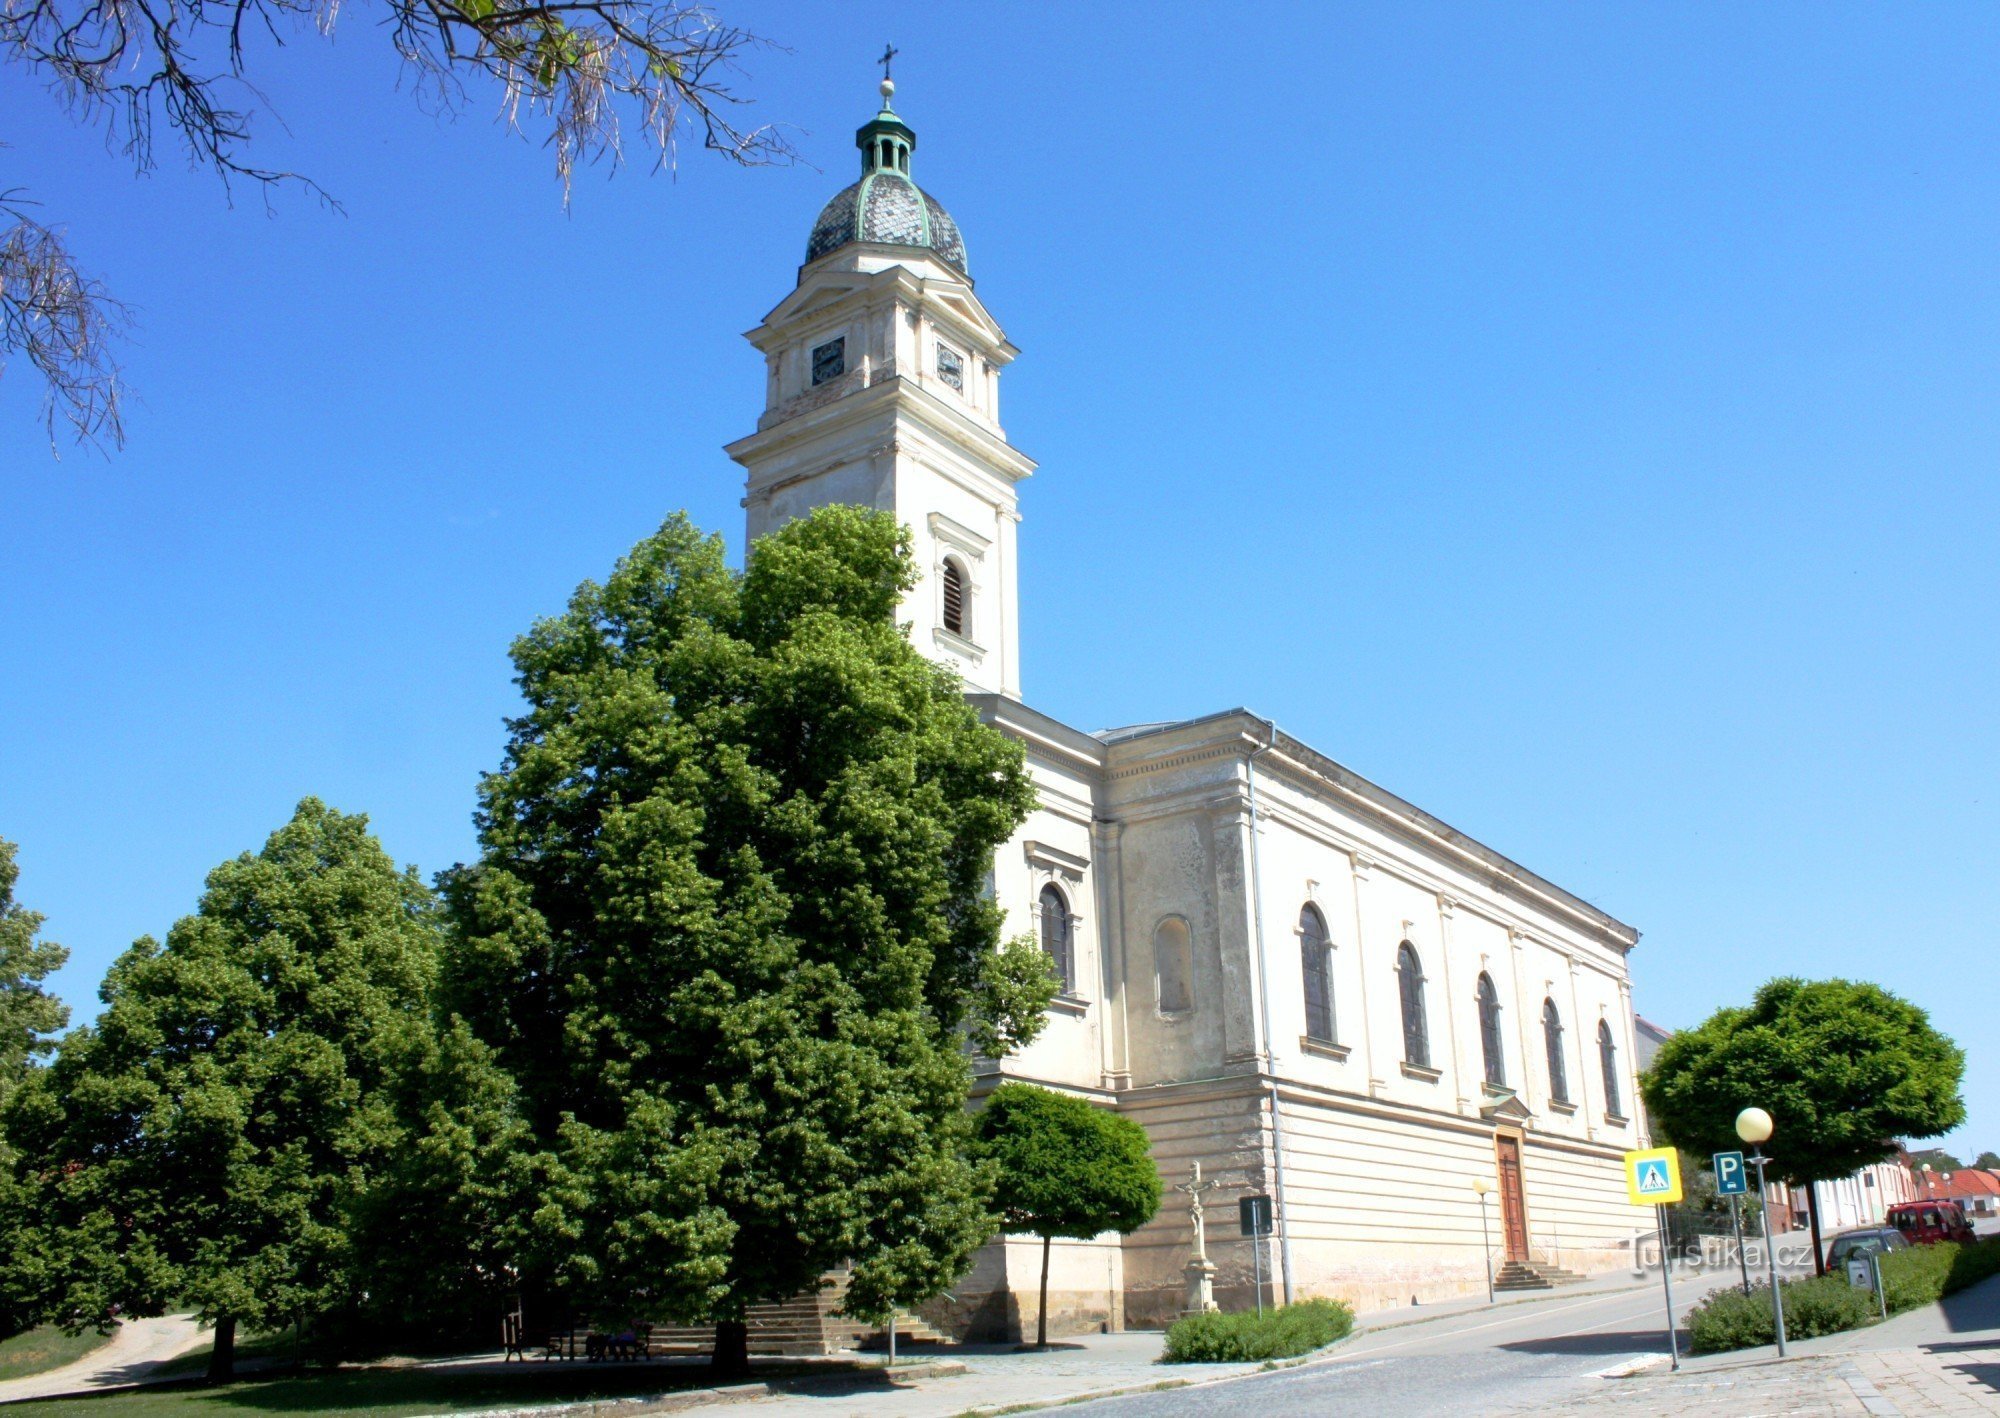 Dolní Kounice - church of St. Peter and Paul